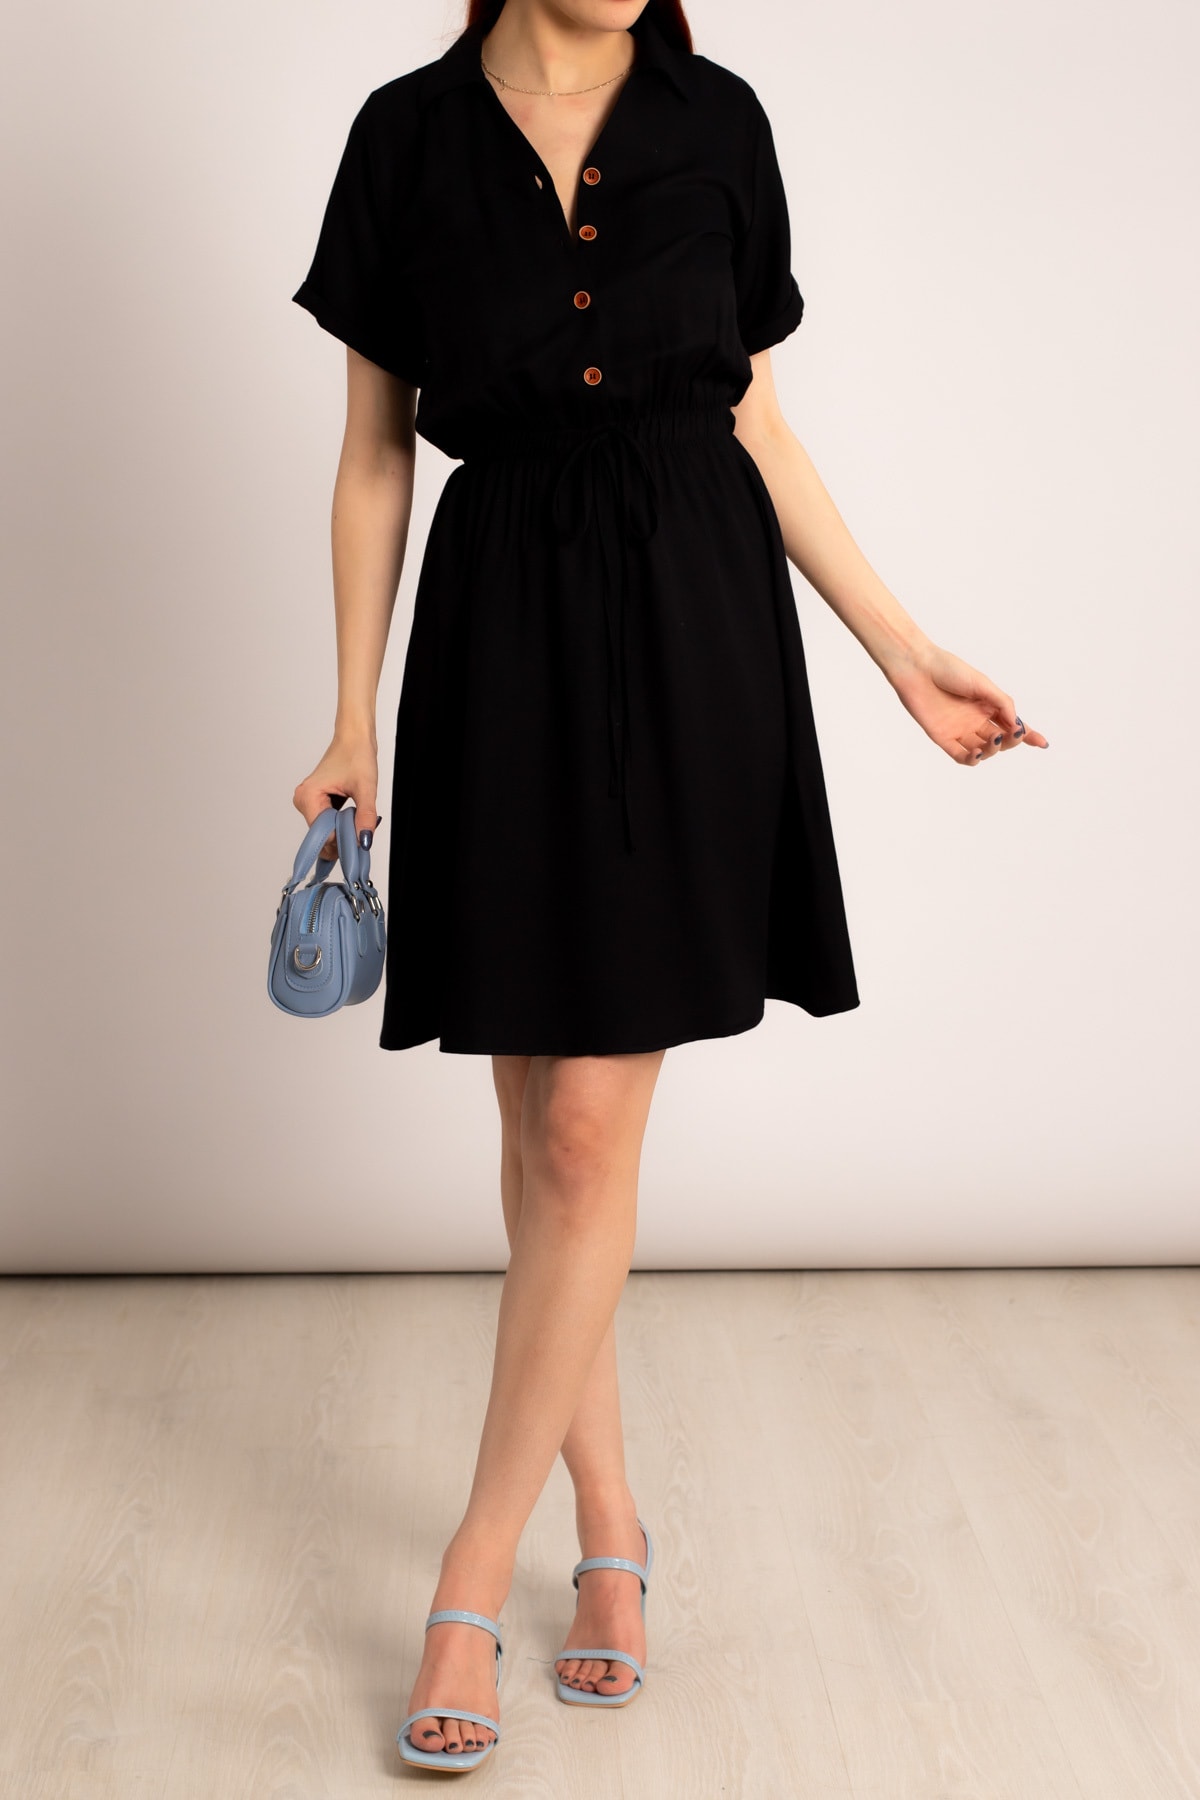 armonika Women's Black Short Sleeve Shirt Dress with Elastic Waist